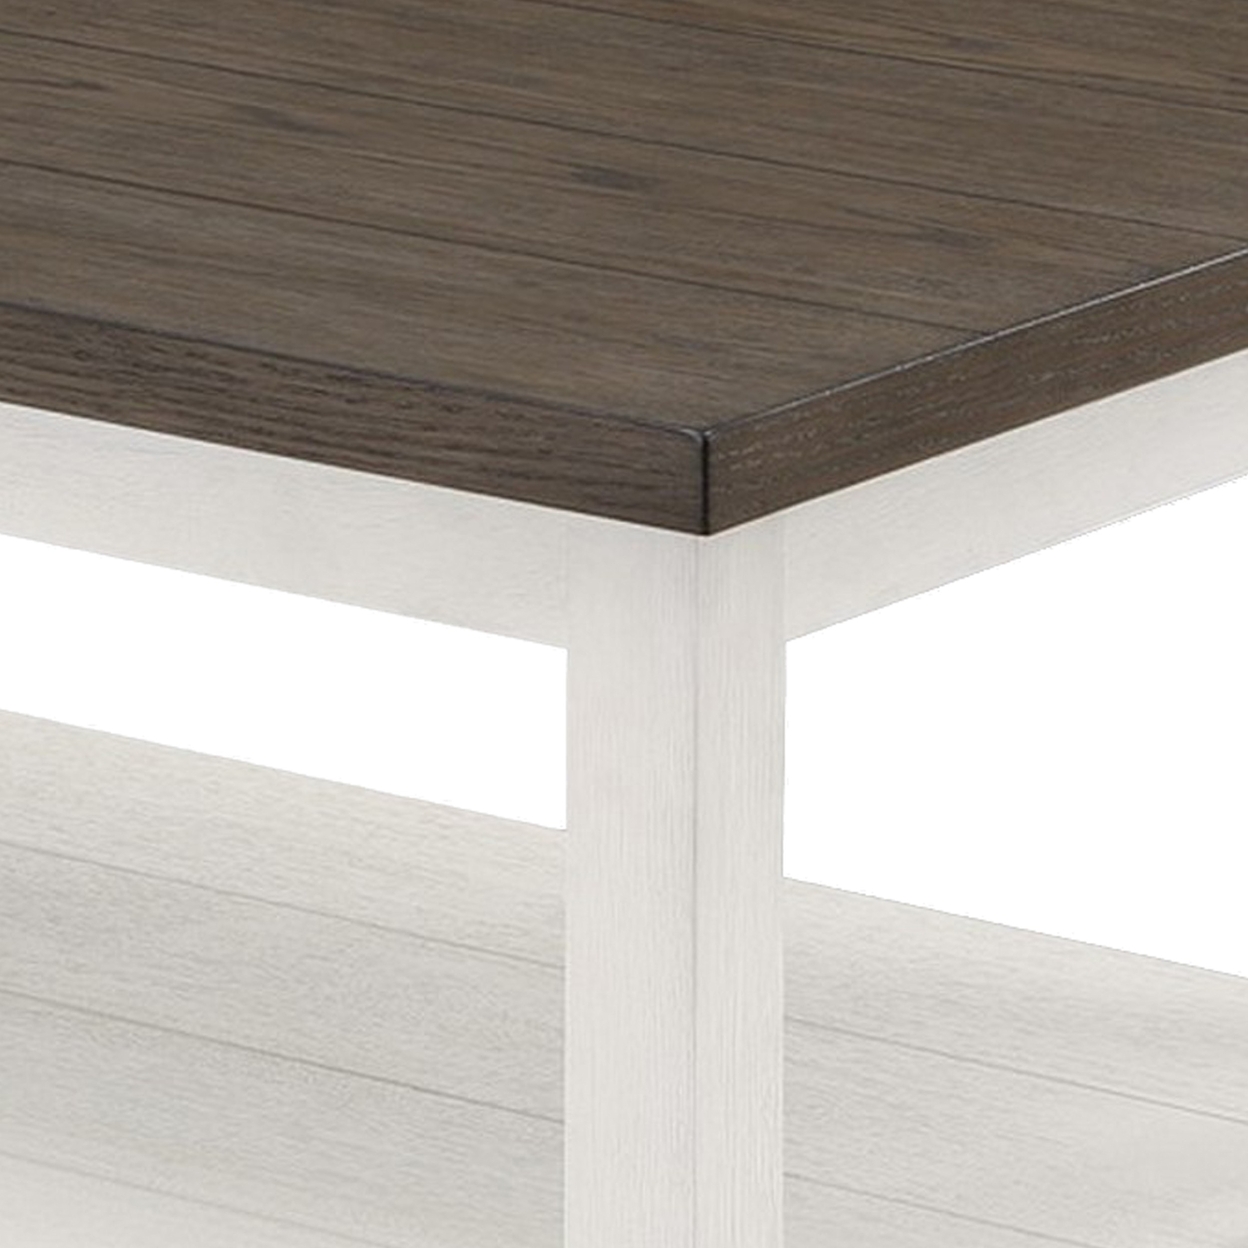 Mon 48 Inch Rectangular Coffee Table, Bottom Shelf, Brown Top, White Frame- Saltoro Sherpi